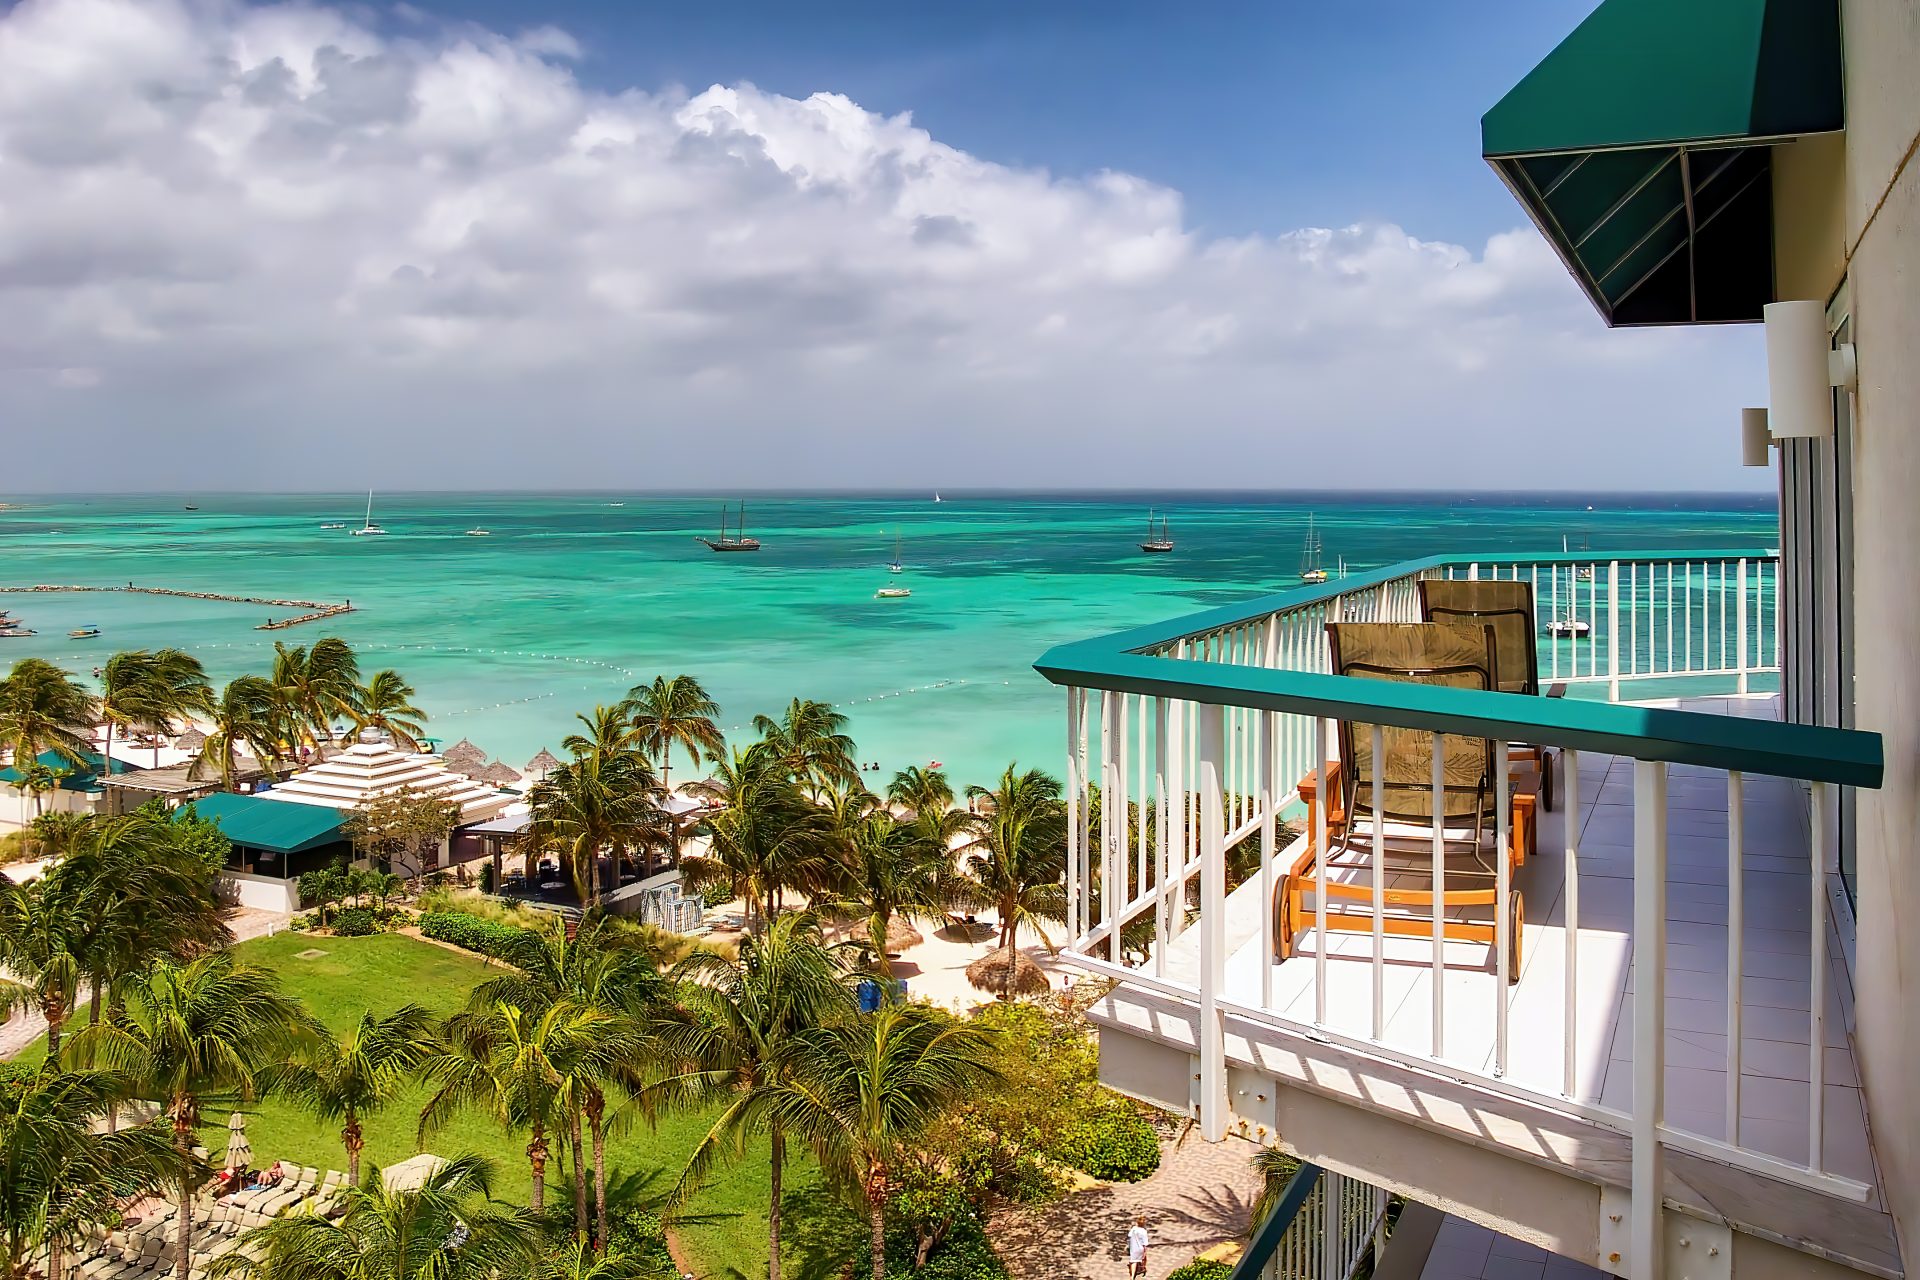 Beautiful balcony view overlooking the blue-green ocean & palm trees in Aruba